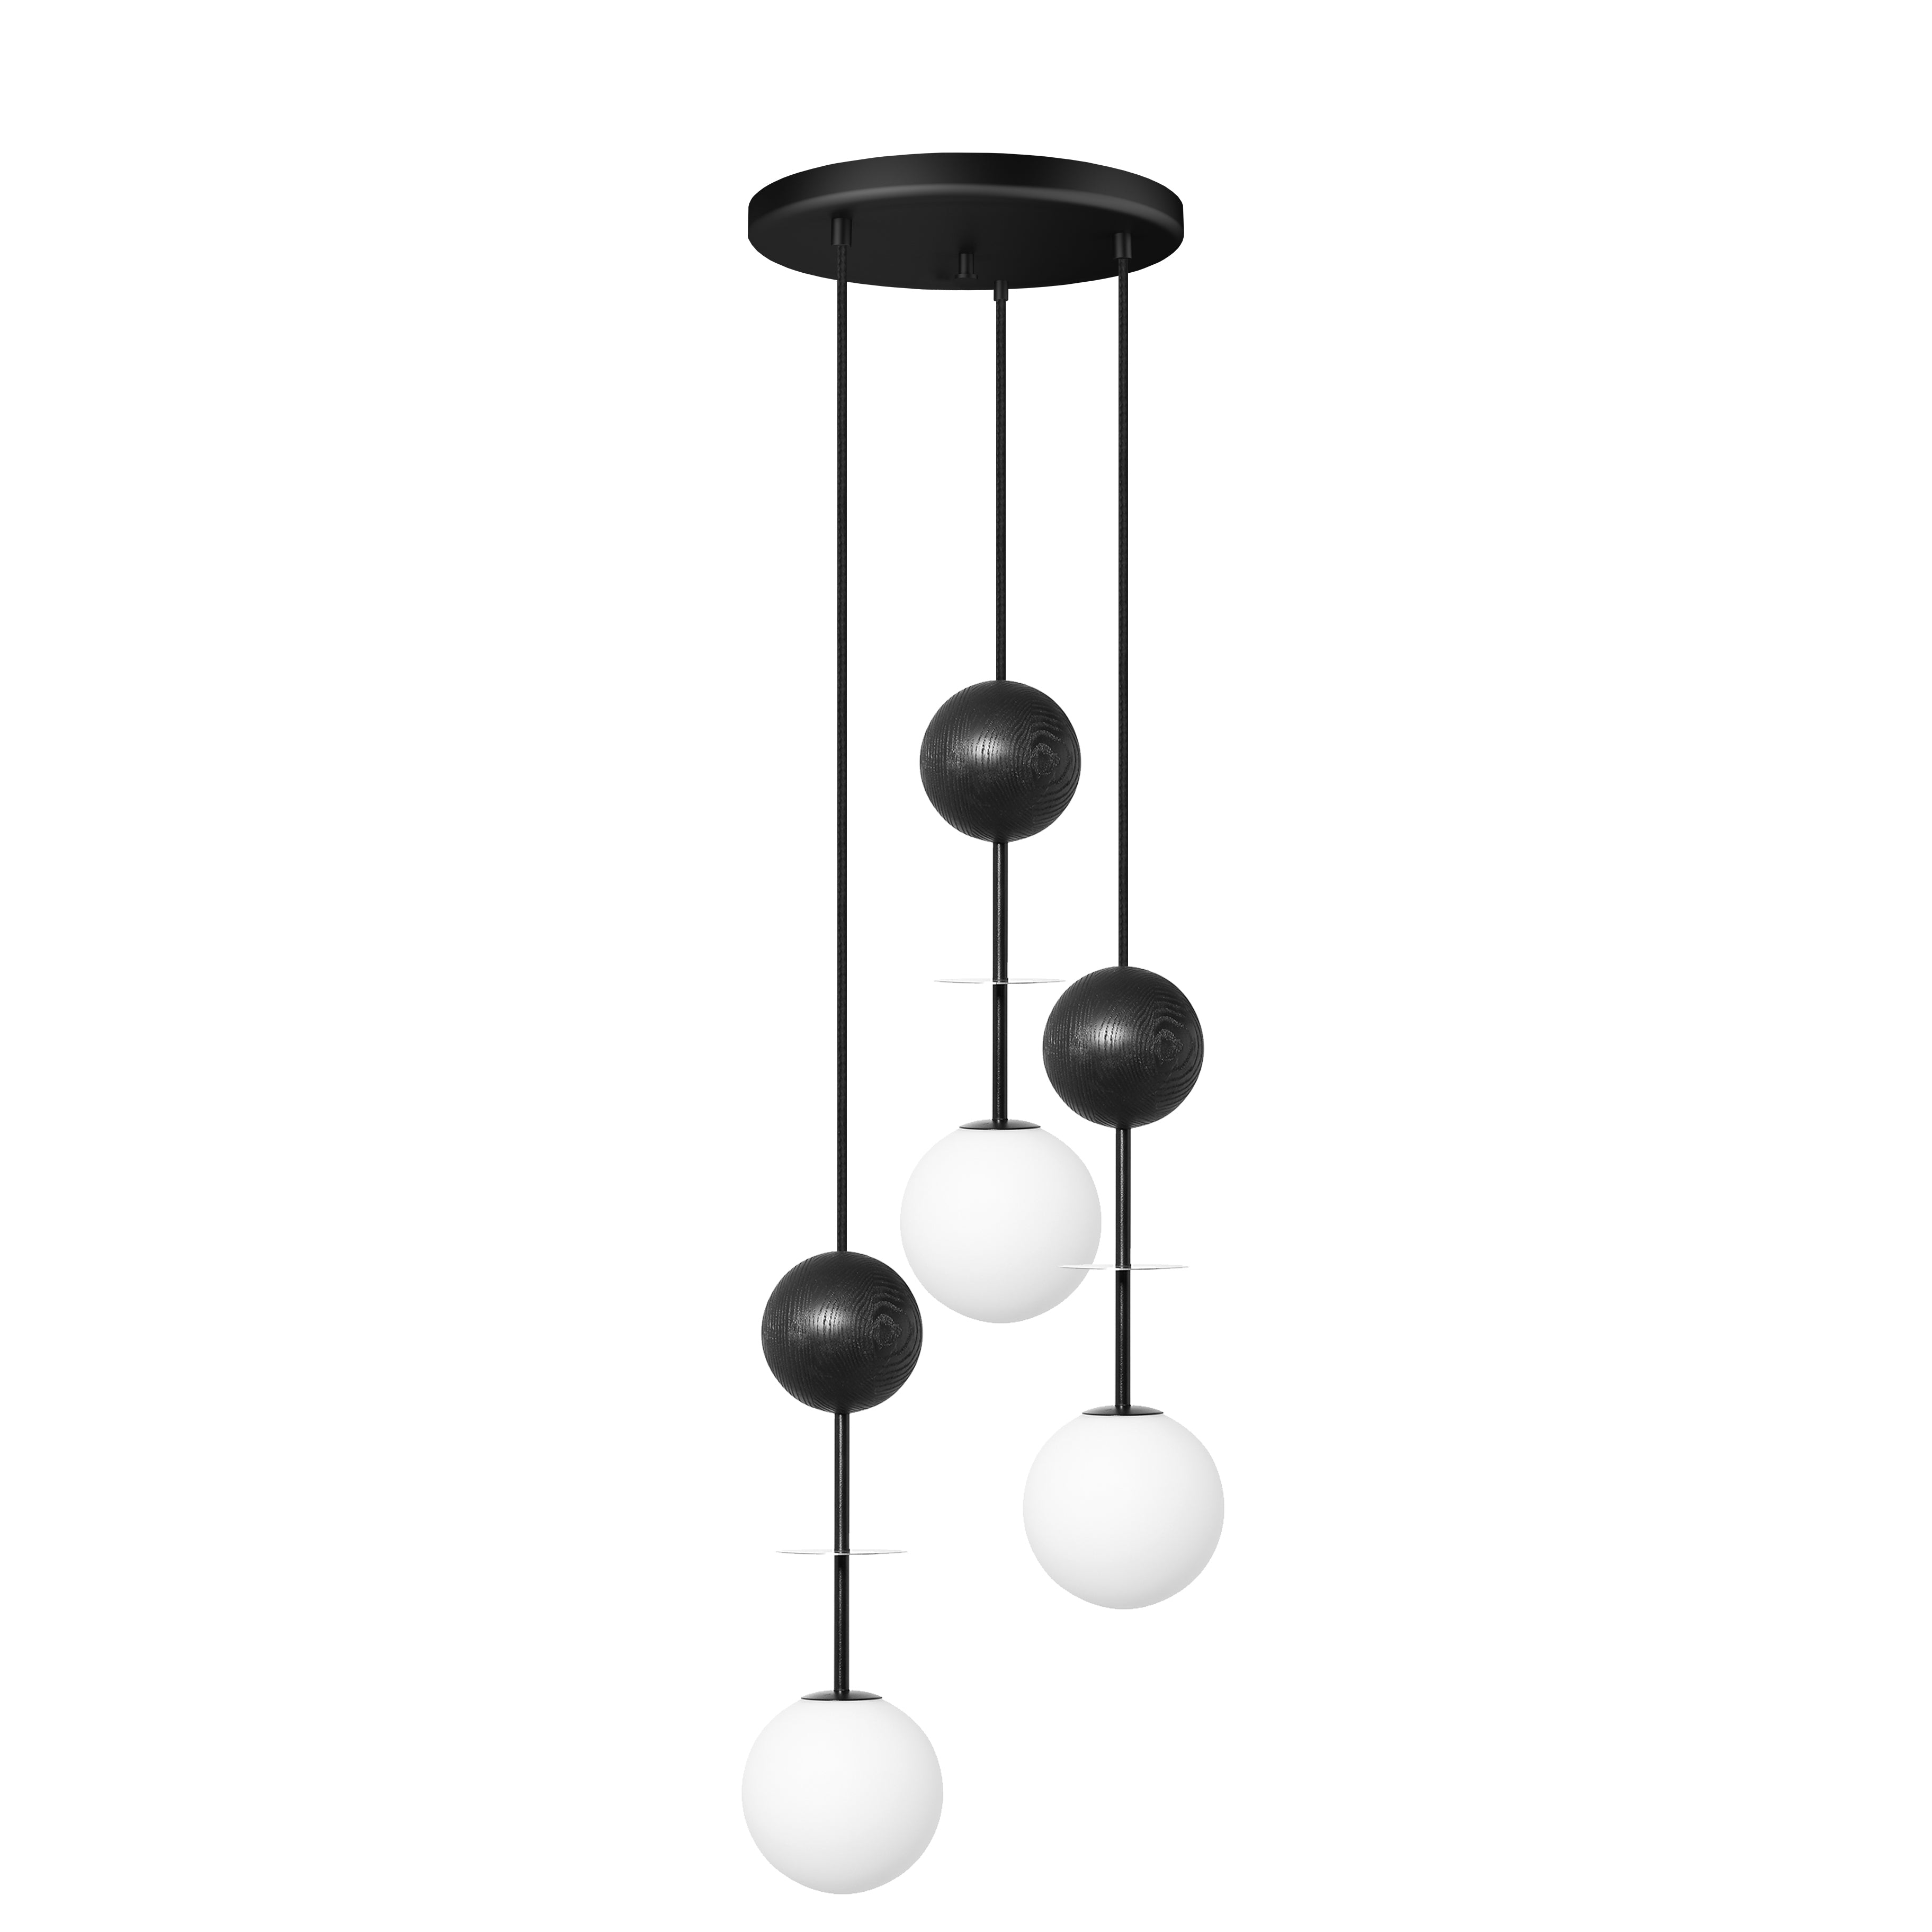 OIO A 3P Black Triple Ceiling Lamp / Plafond